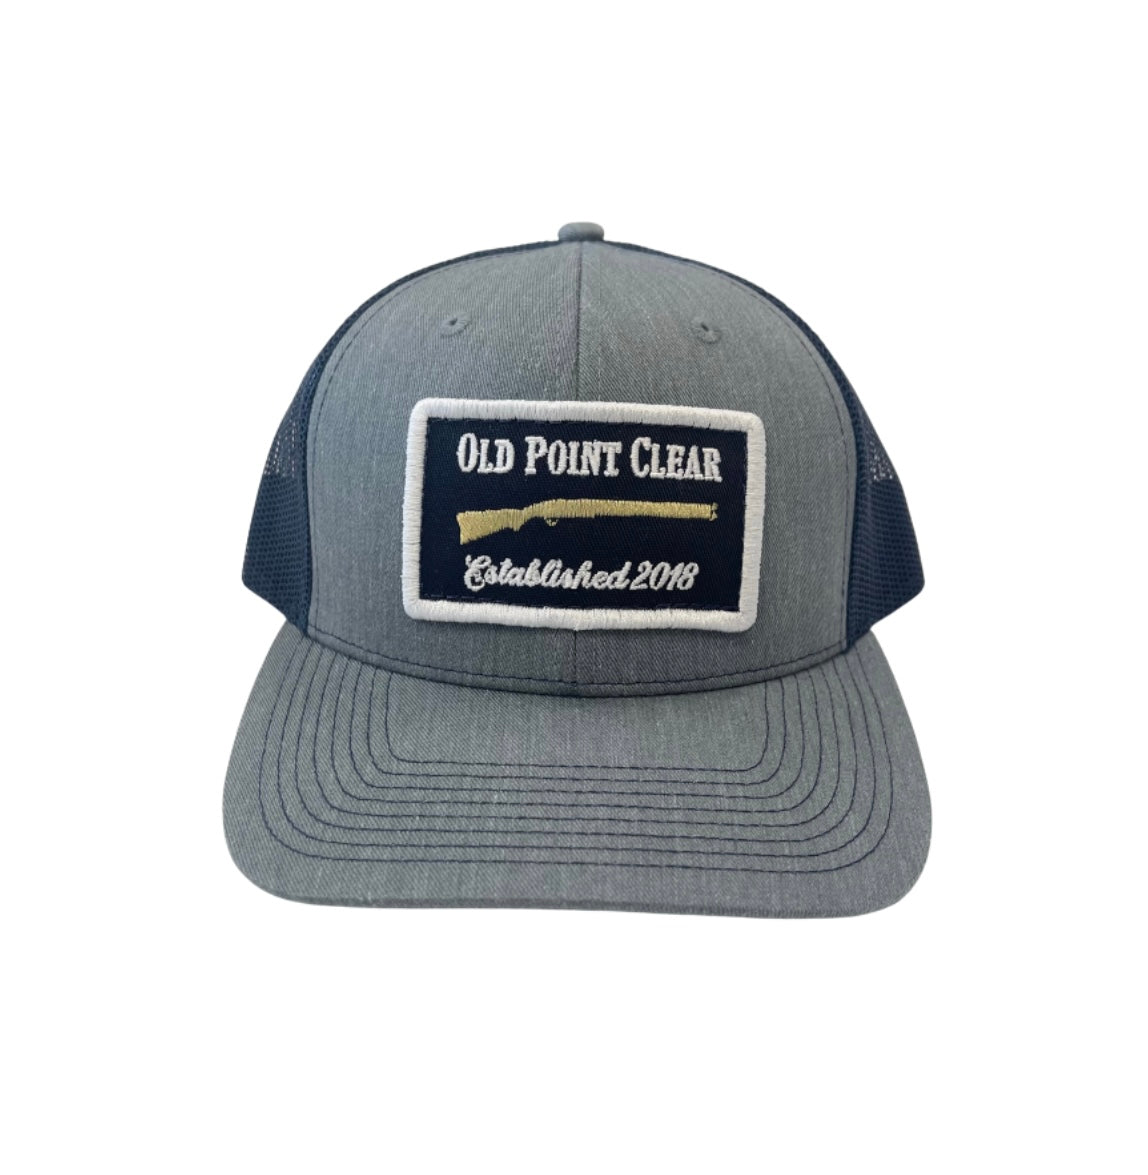 Old Point Clear Hat - Grey/Navy Gun Patch